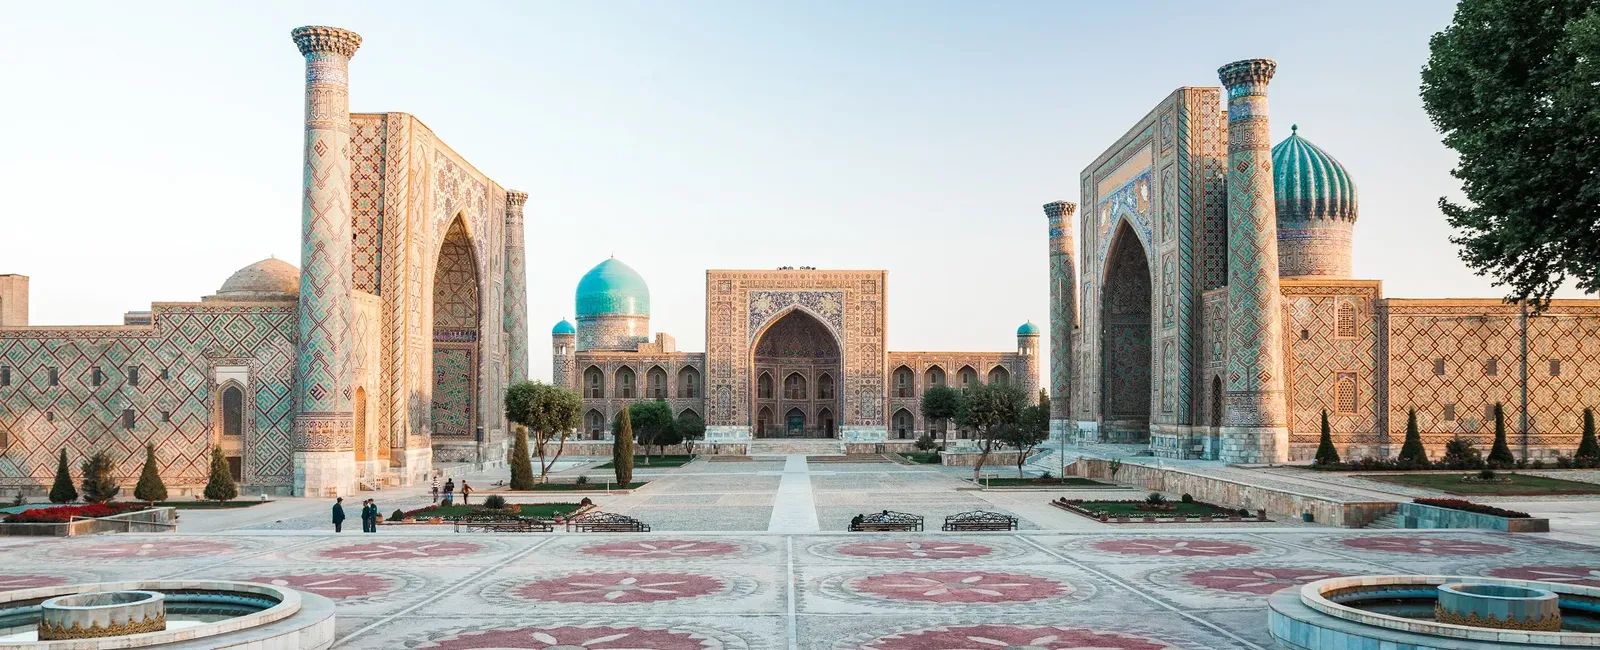 Samarqand | Samarqand Region Region, Uzbekistan - Rated 4.8